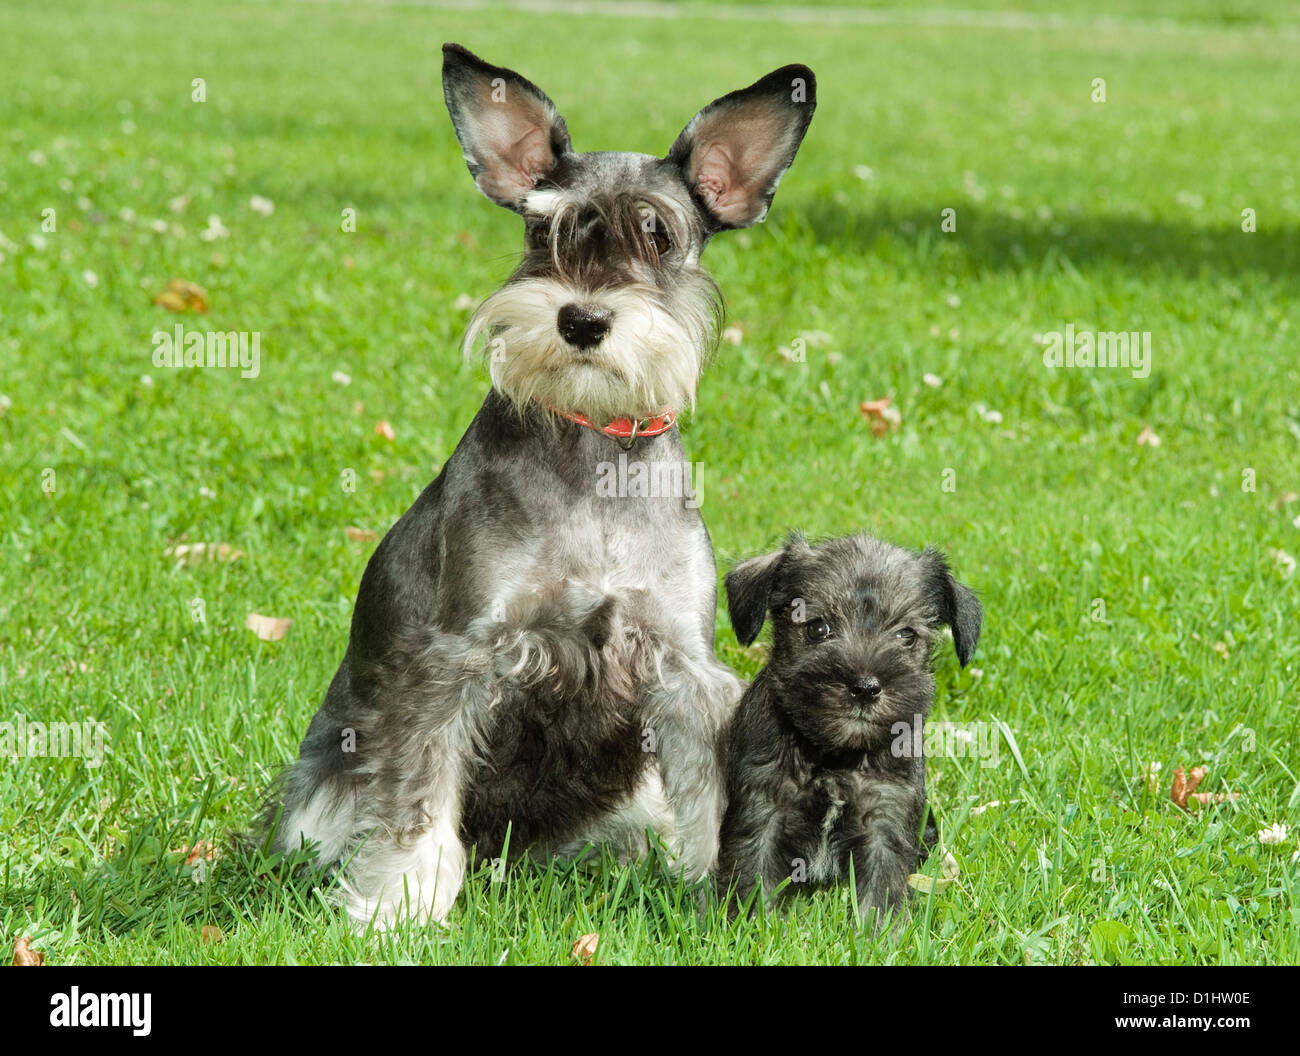 Schnauzer-Hunde auf der Wiese Stockfotografie - Alamy